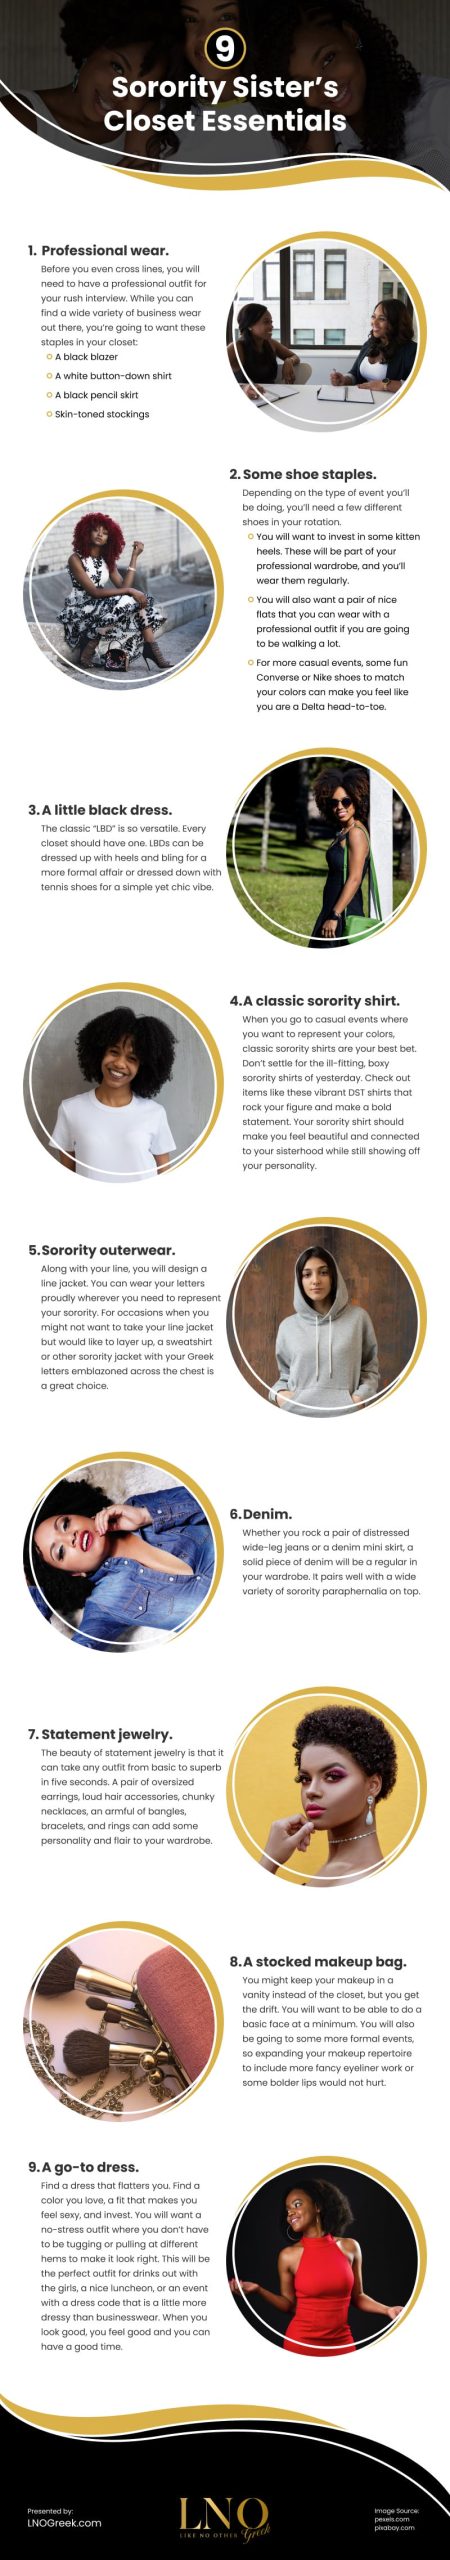 9 Sorority Sister’s Closet Essentials Infographic